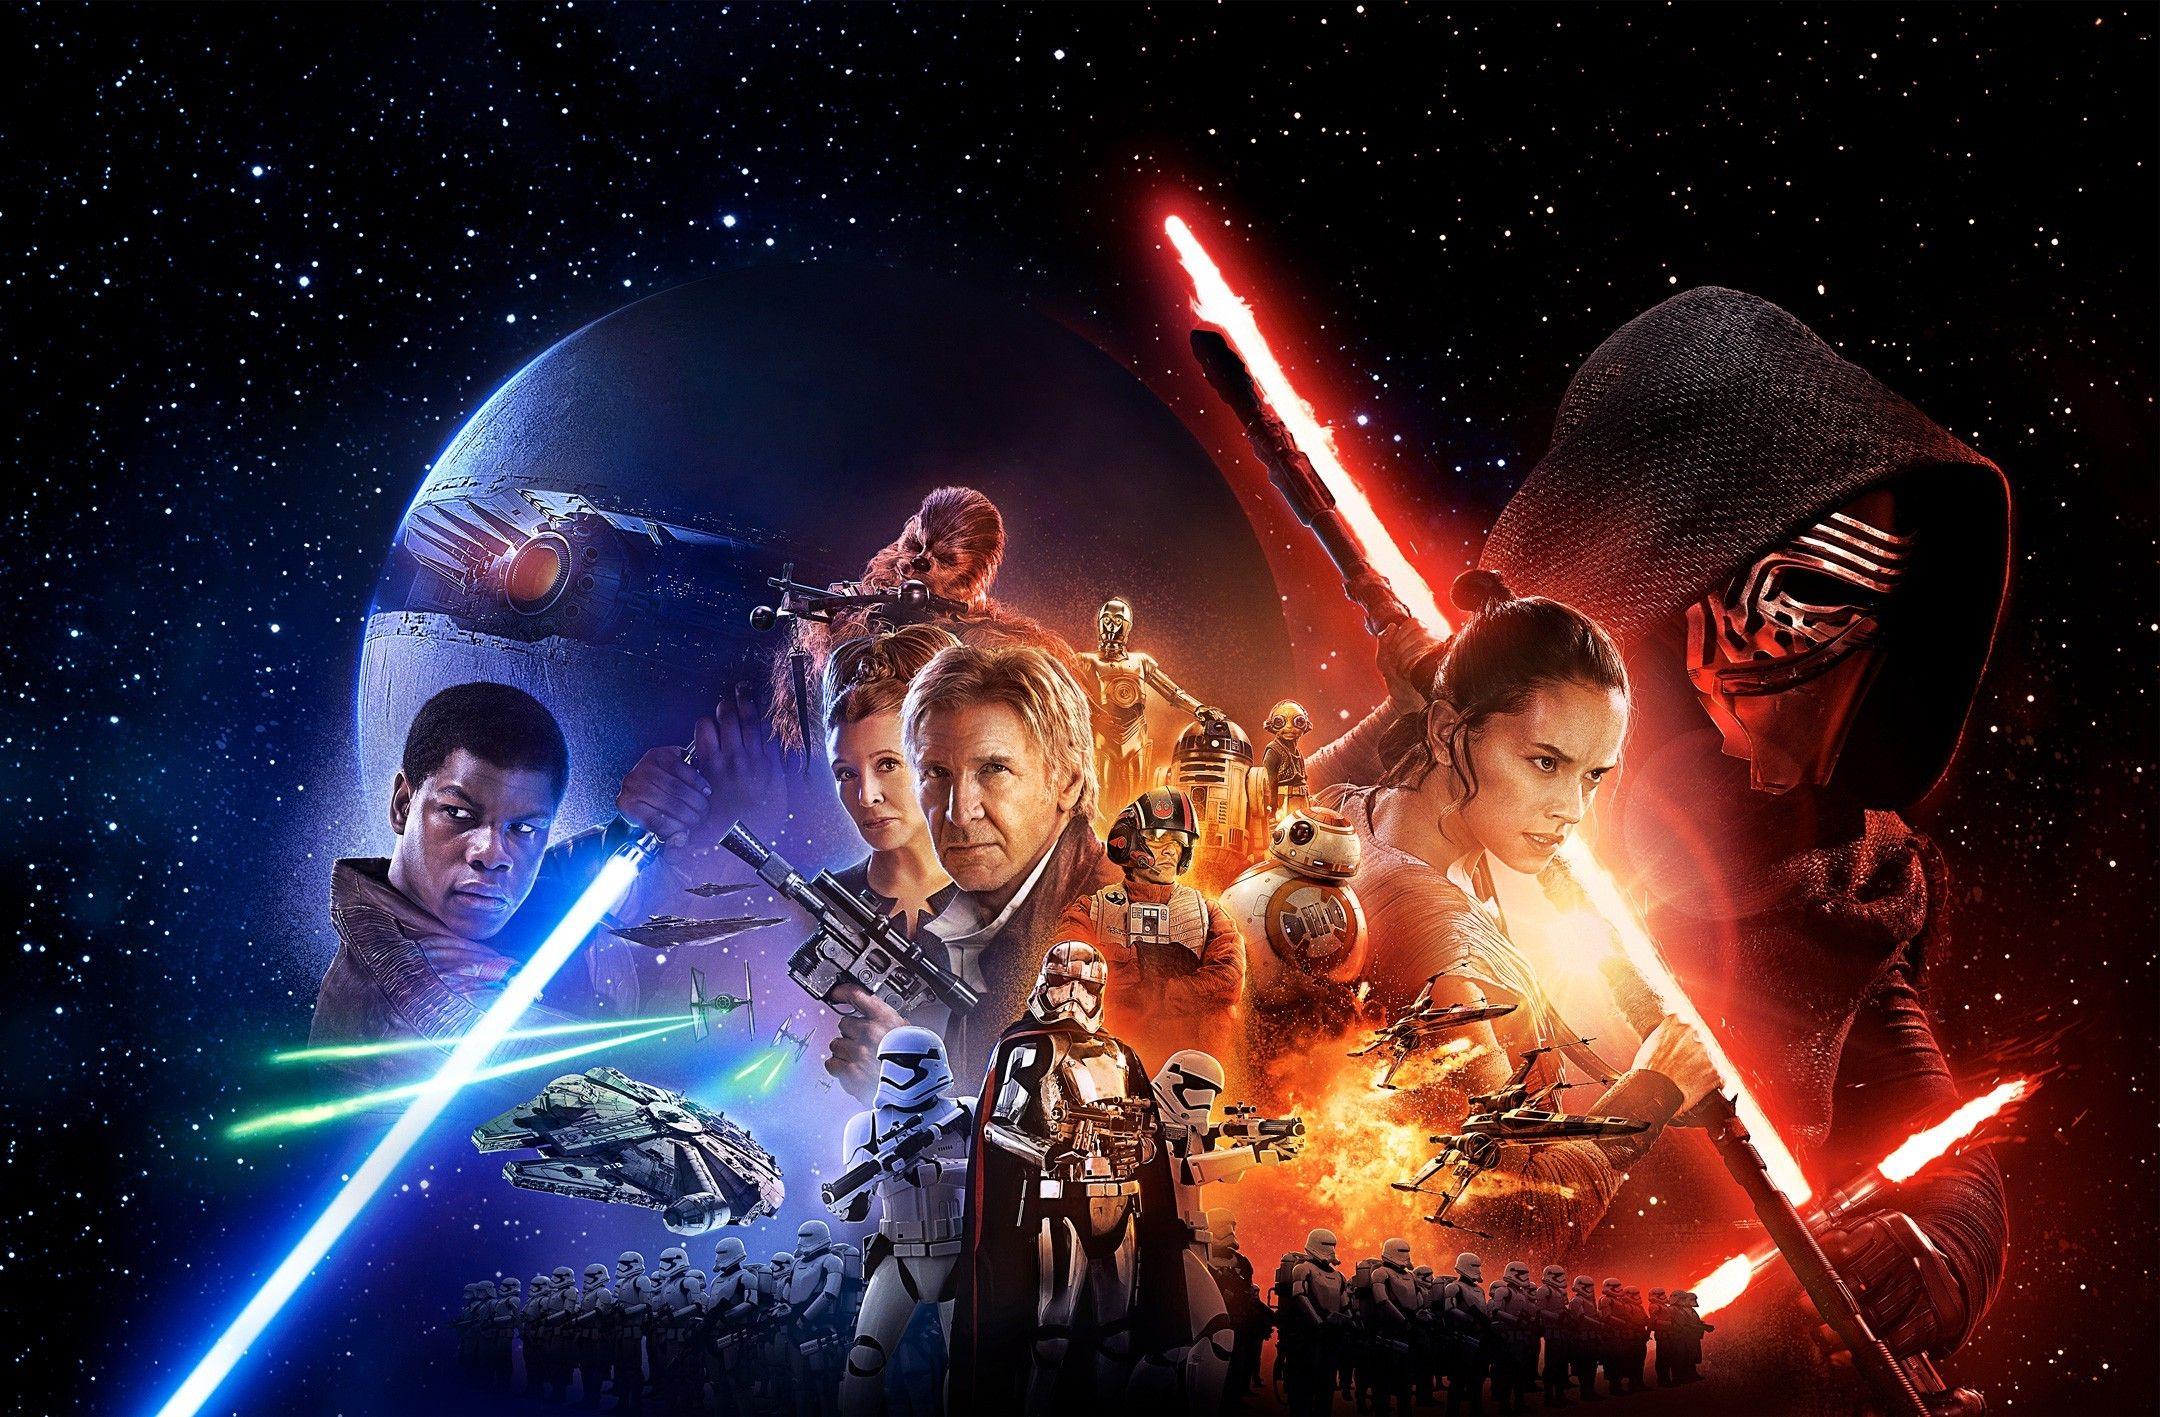 Star Wars Episode VII: The Force Awakens Wallpaper 23 X 1417